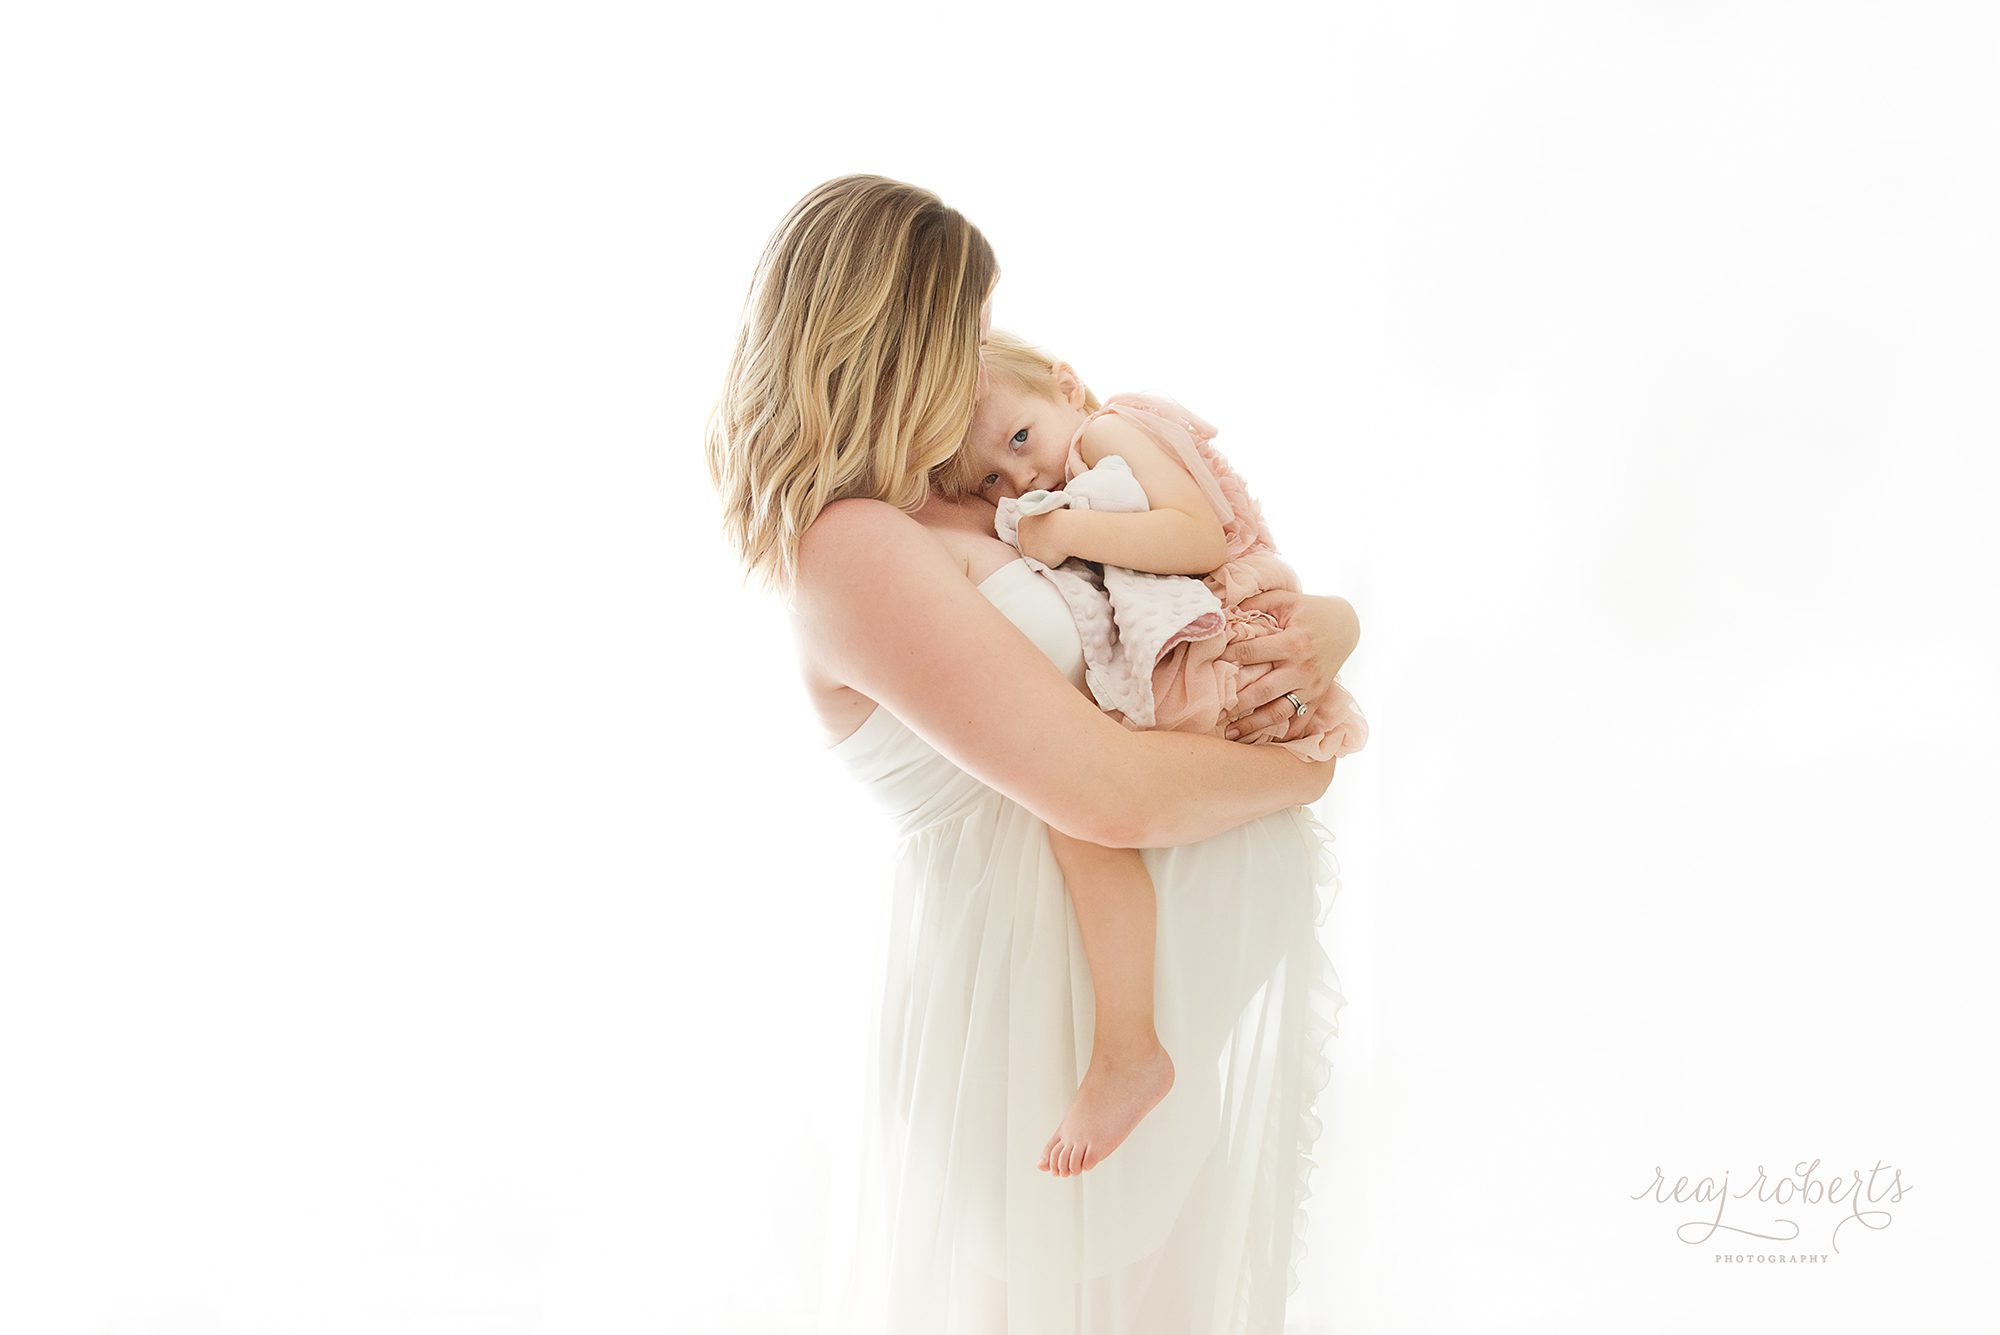 Chandler Organic Luxury Maternity Photographer | Reaj Roberts Photography